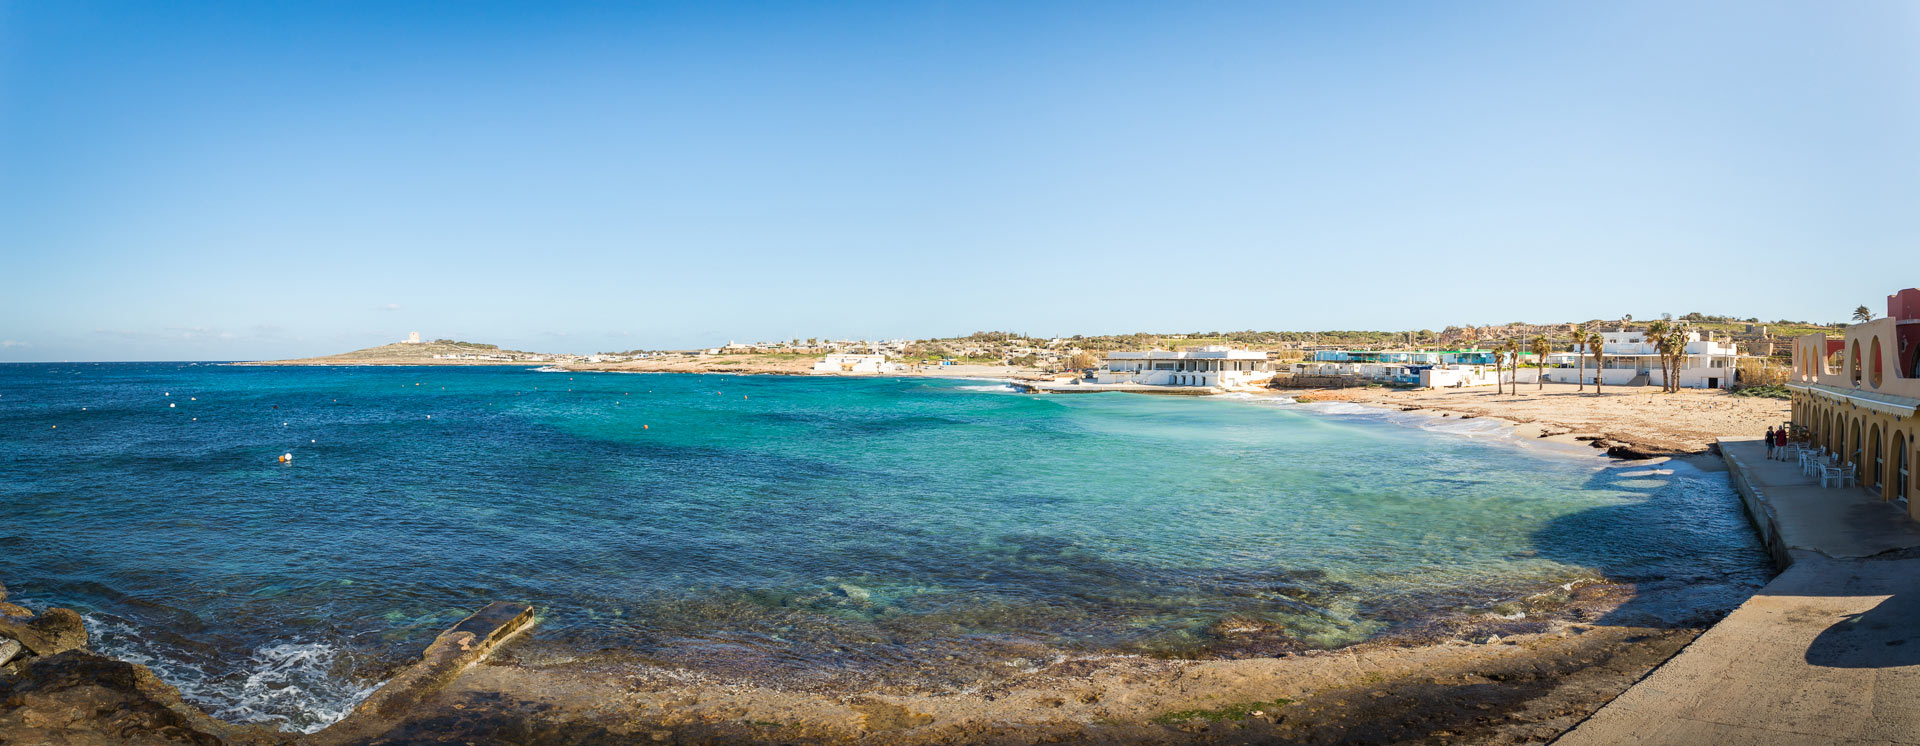 Armier Bay Malta - best Malta beaches